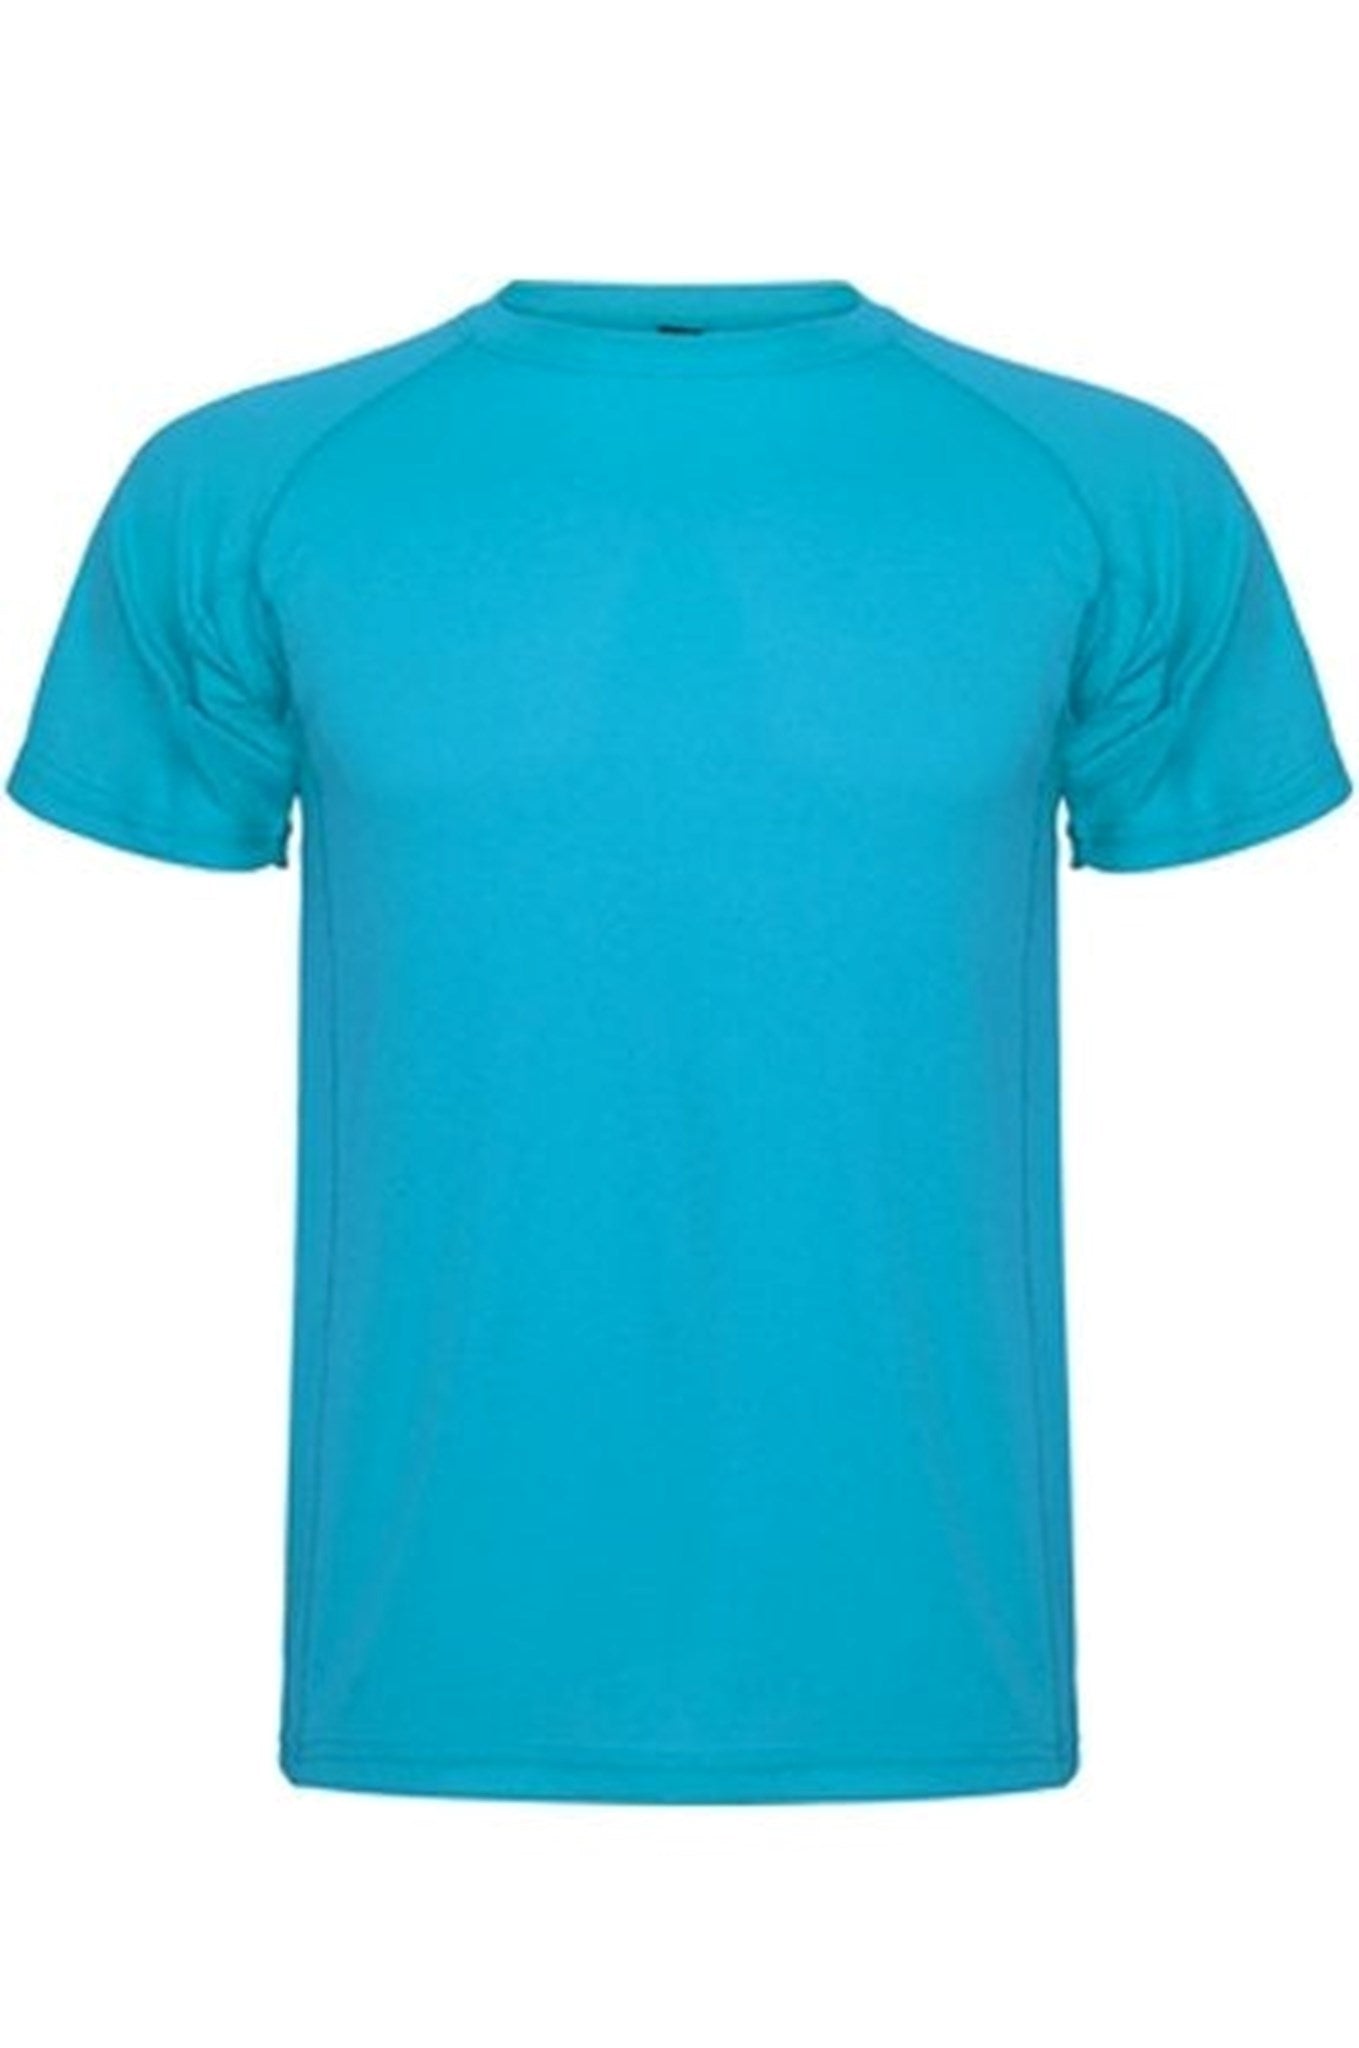 Trænings T-shirt - Turkis blå - TeeShoppen - Hvid